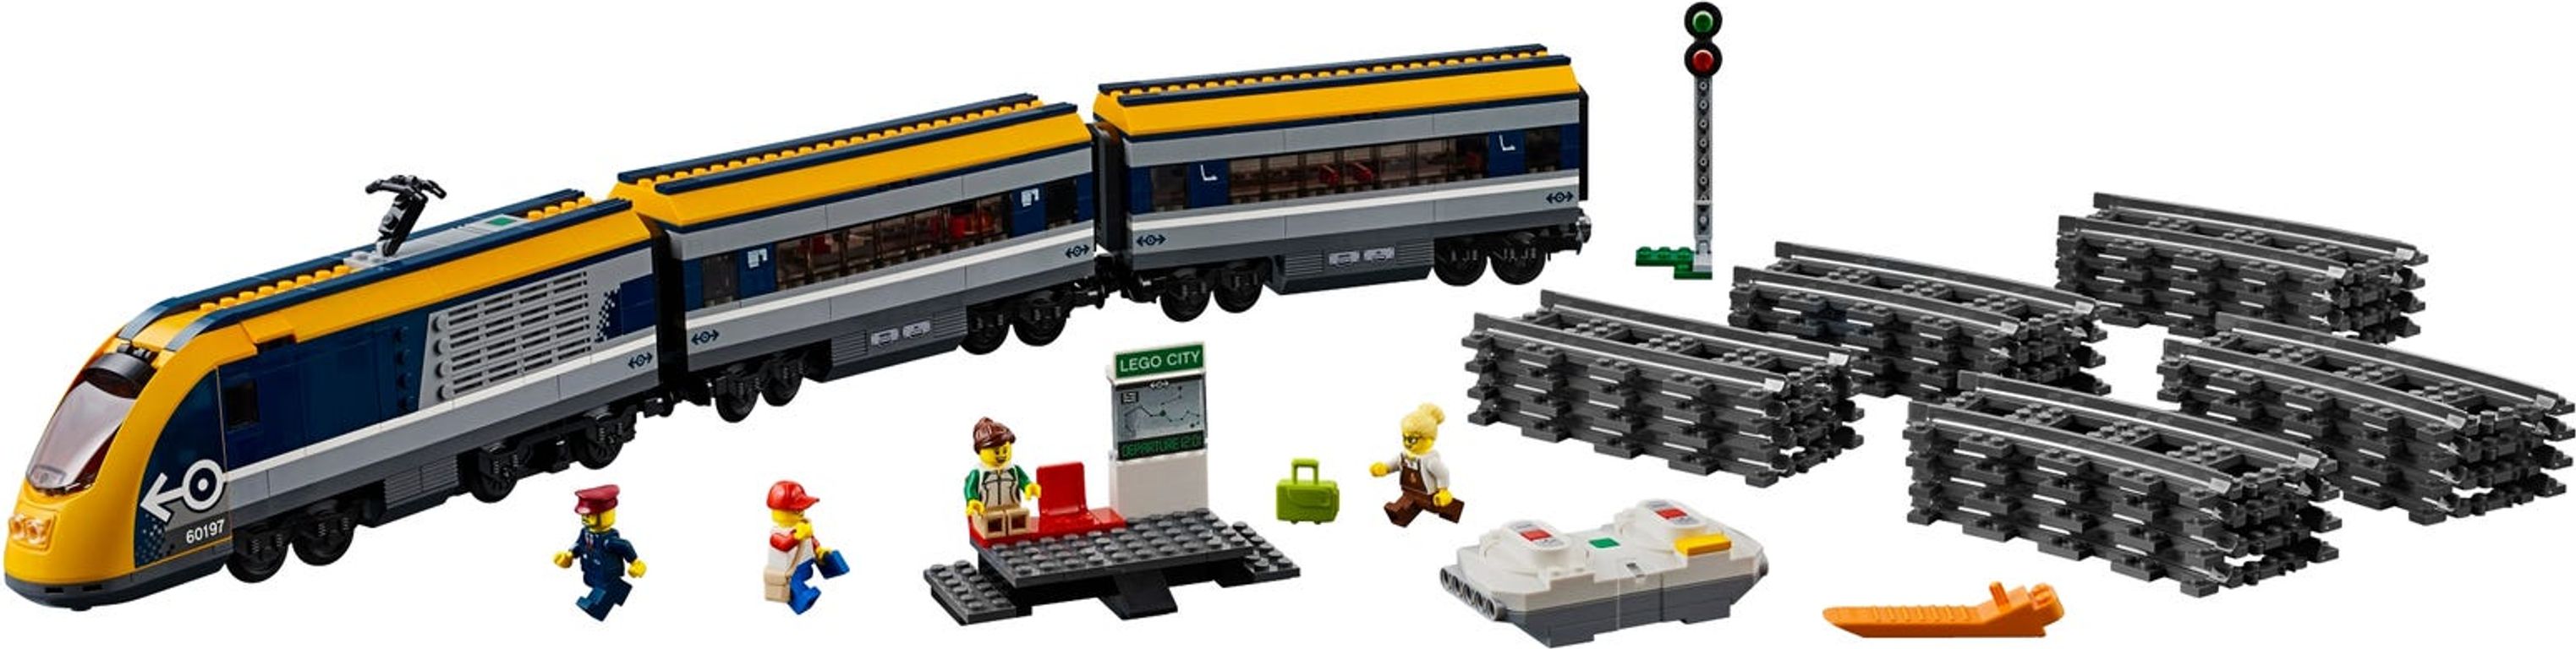 LEGO® City Passenger Train components